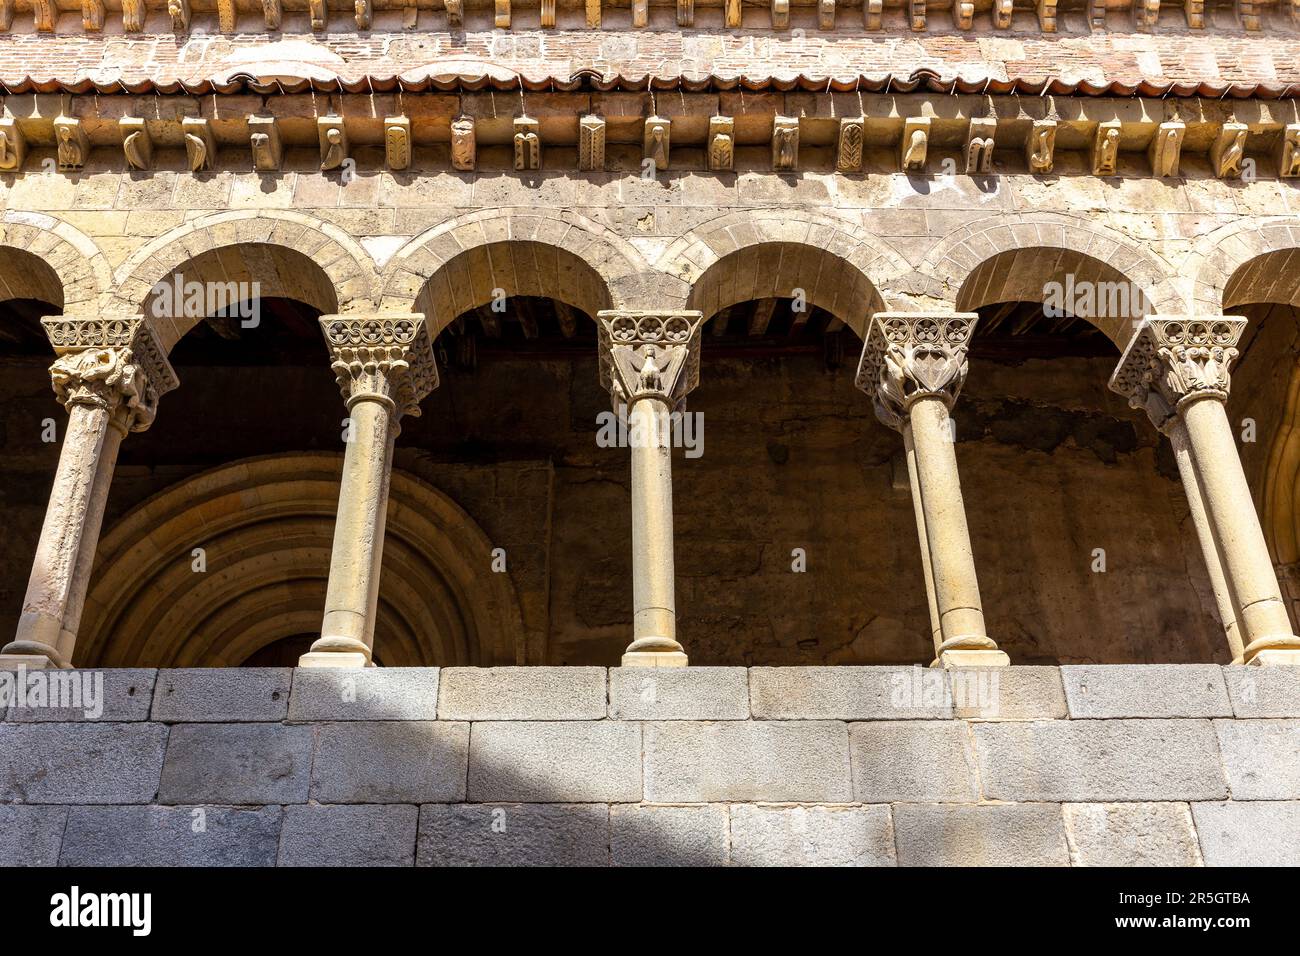 Porticoed gallery of the Iglesia de San Martín (Church of Saint Martin) in Segovia, Spain with semicircular arches with Romanesque capitals, Stock Photo